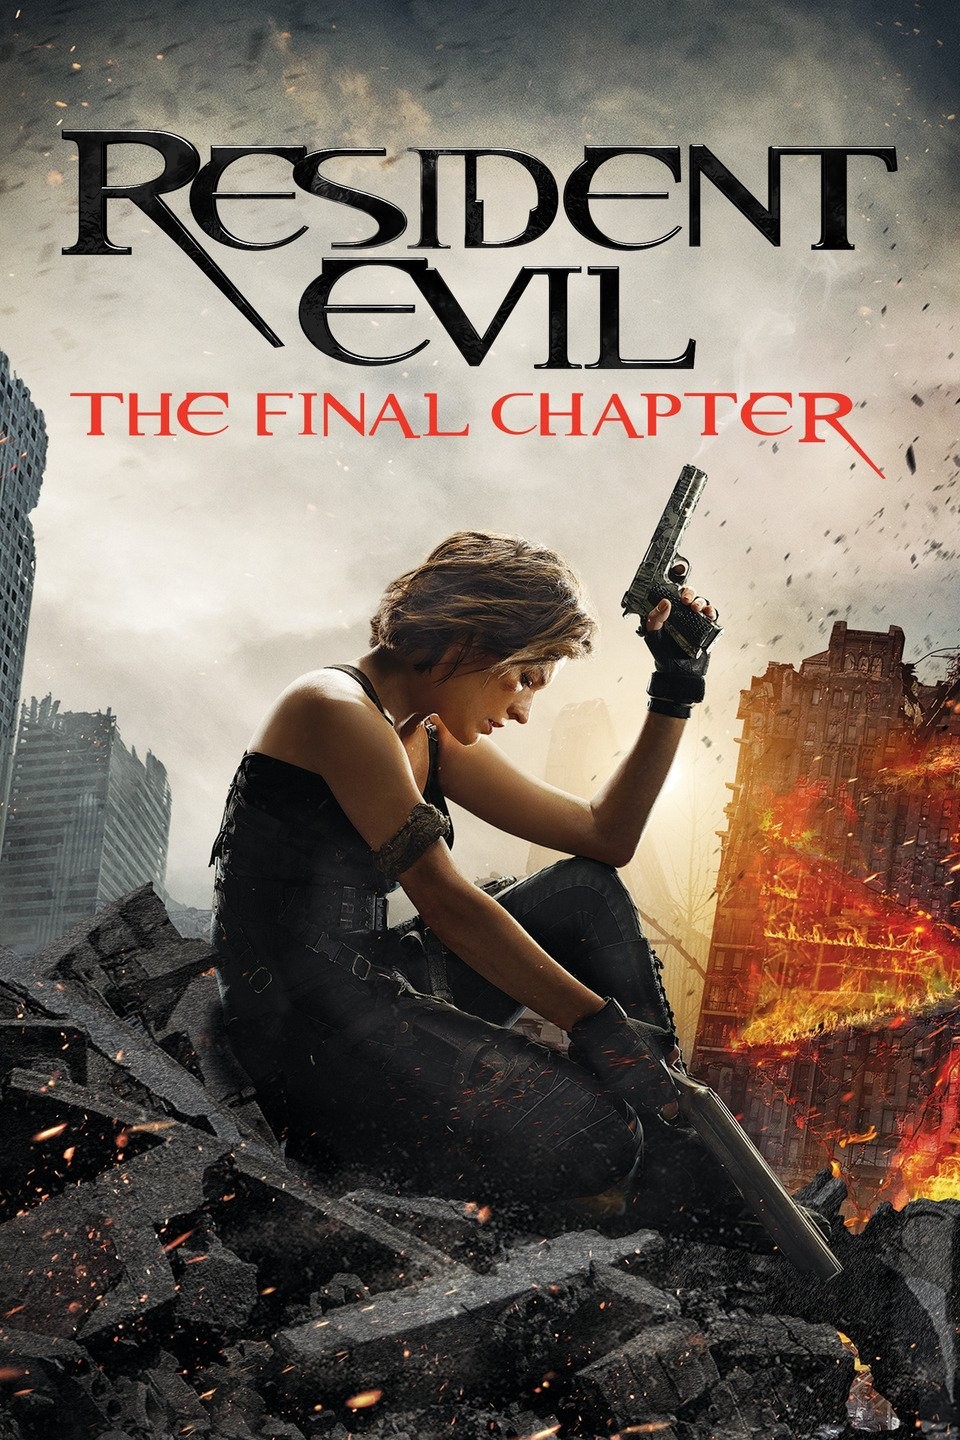 Resident Evil 6 – O Capítulo Final (2016)